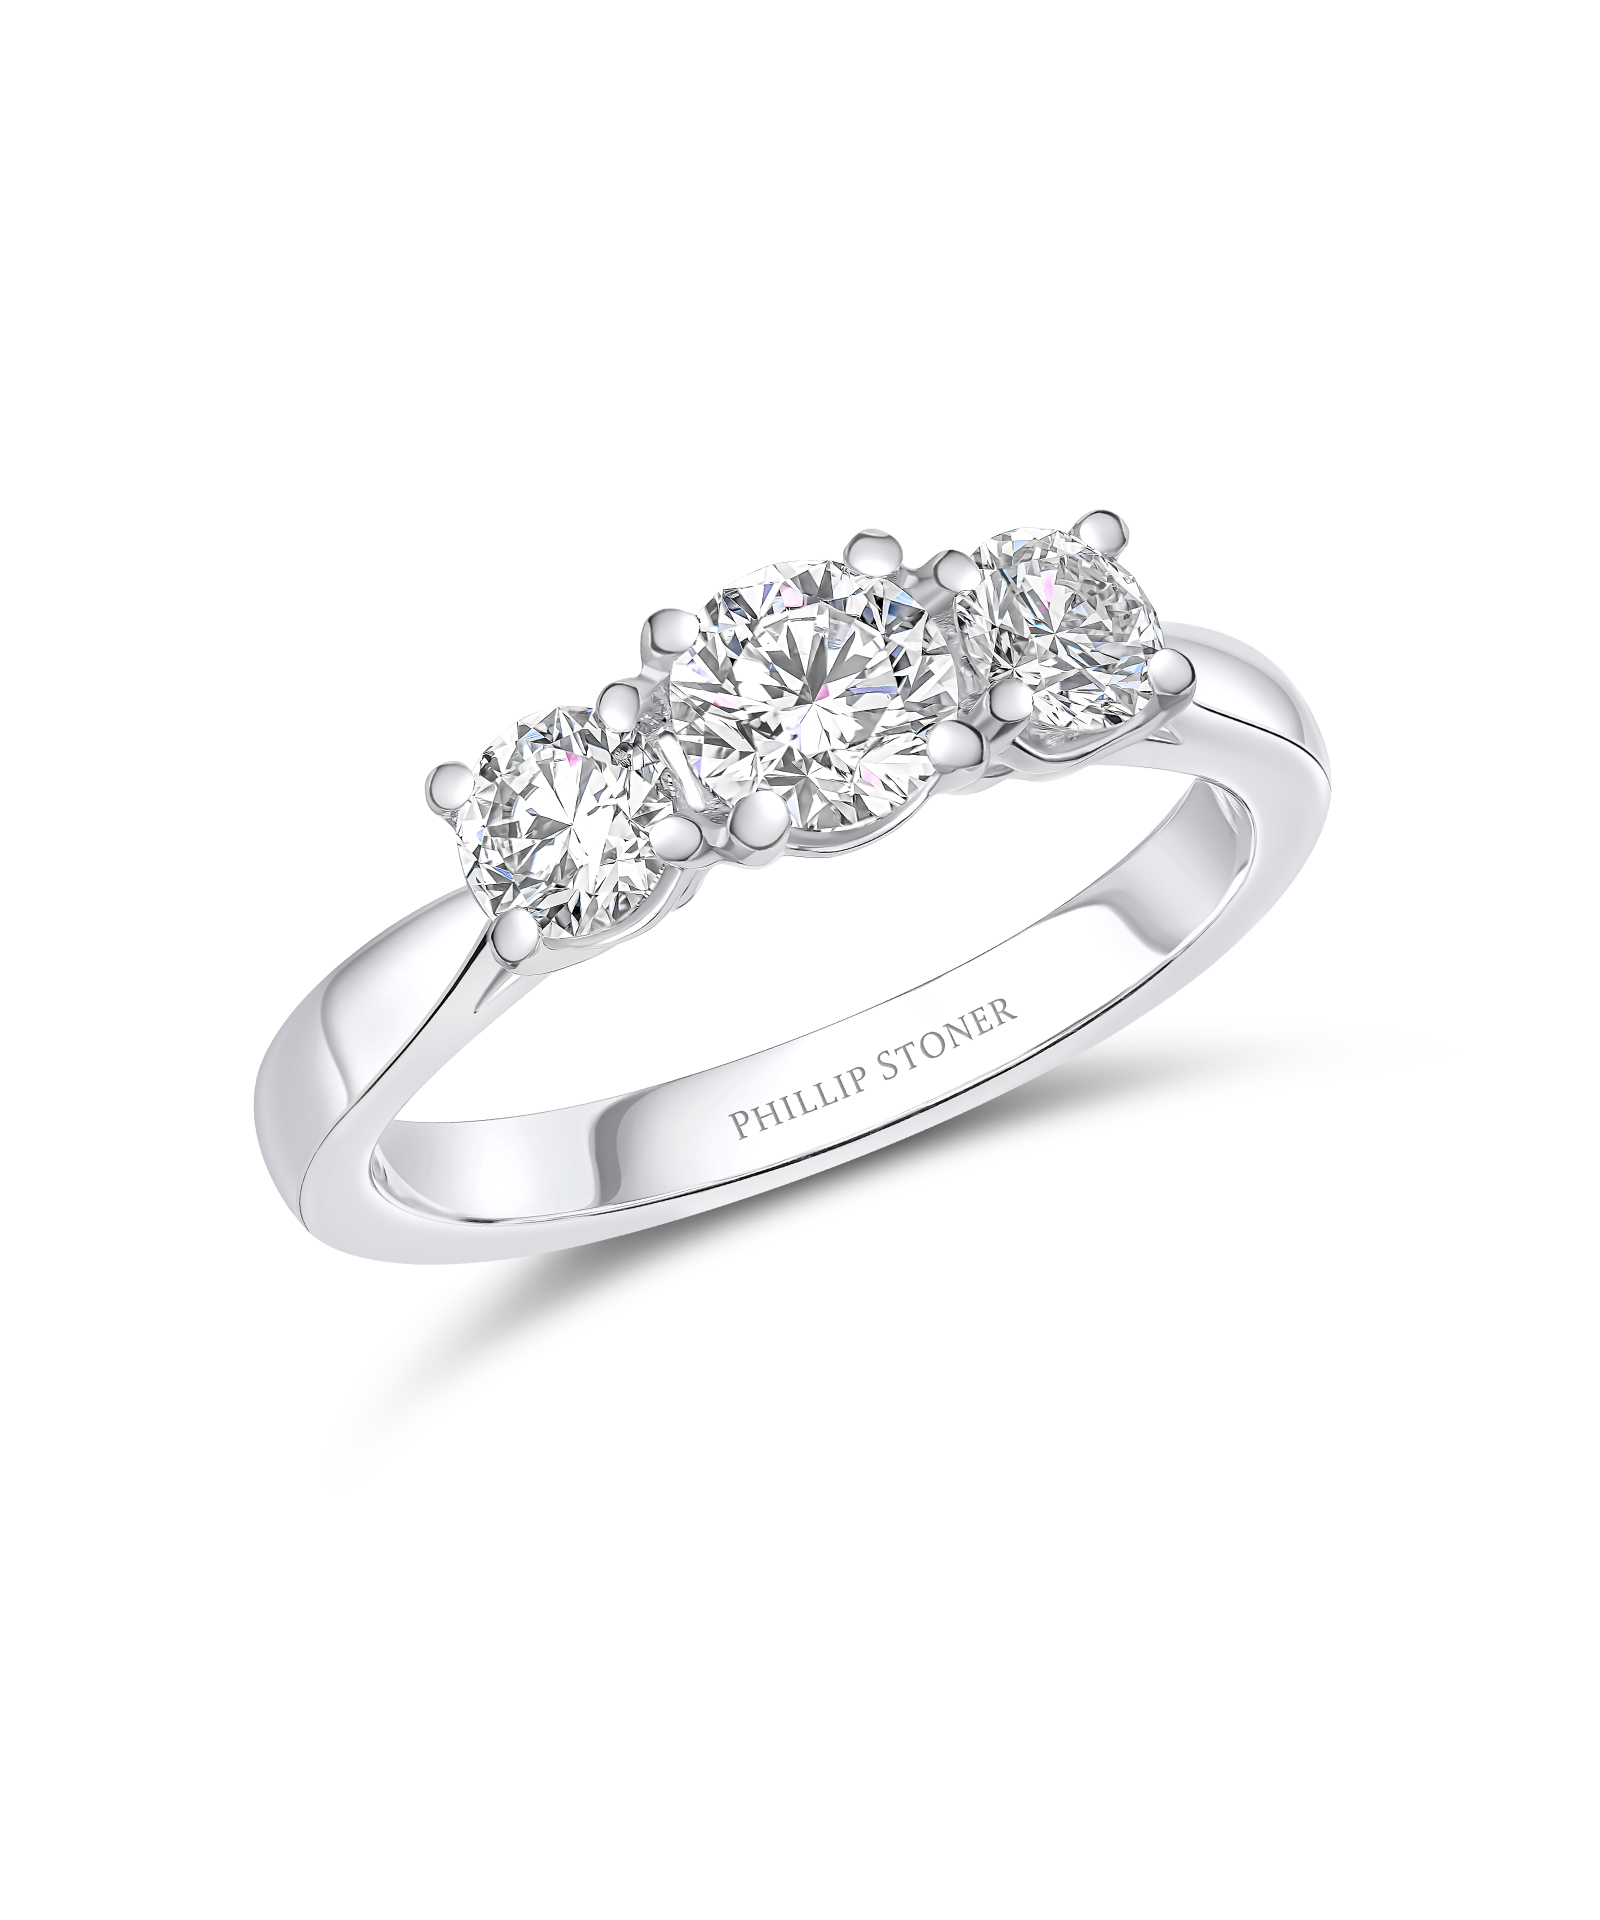 0.50ct Round Brilliant Cut Diamond Trilogy Engagement Ring - Phillip Stoner The Jeweller